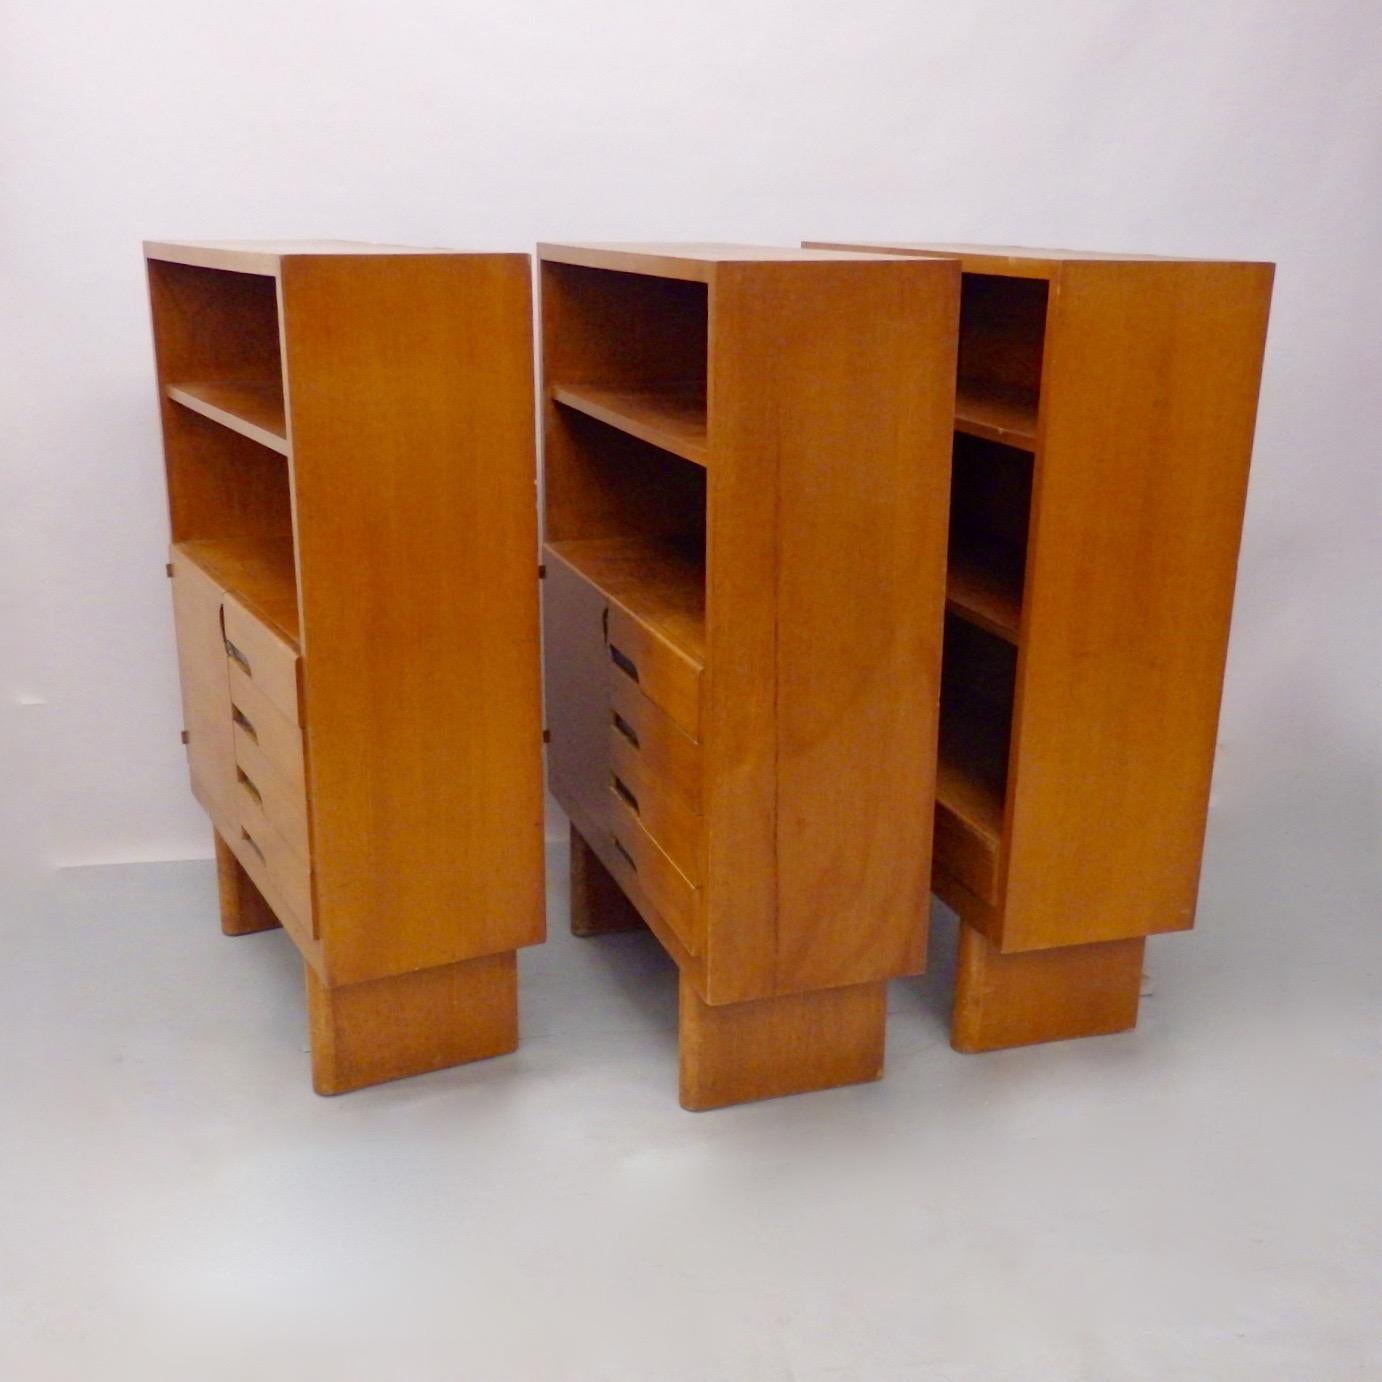 Mahogany Rare Find Three Gilbert Rohde for Herman Miller Art Deco Bookshelf Units